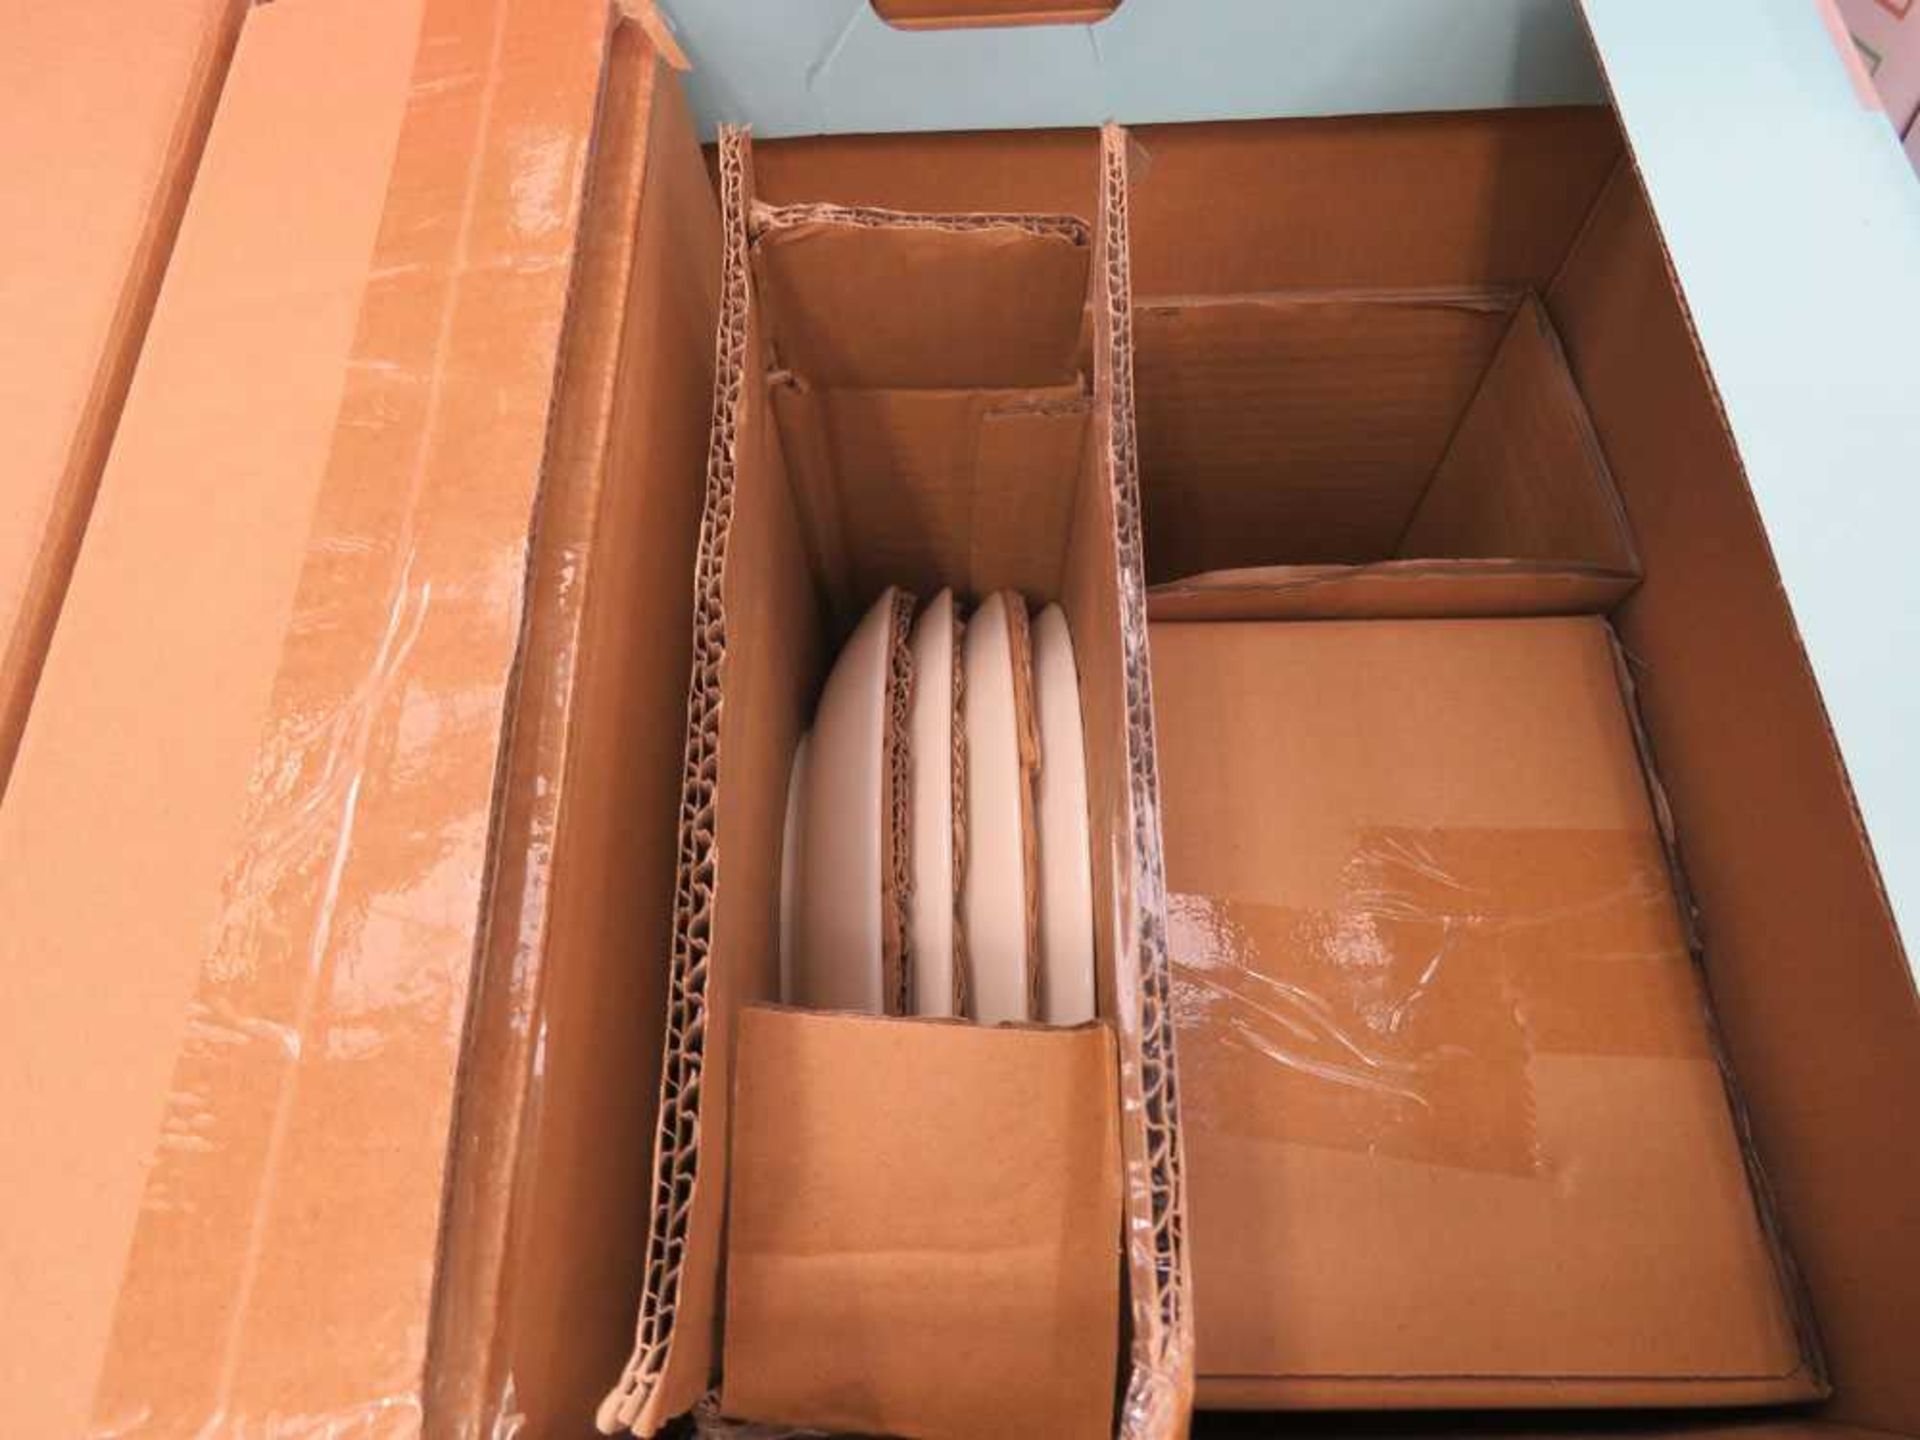 +VAT Gordon Ramsay Royal Doulton dinnerware set in box - Image 2 of 2